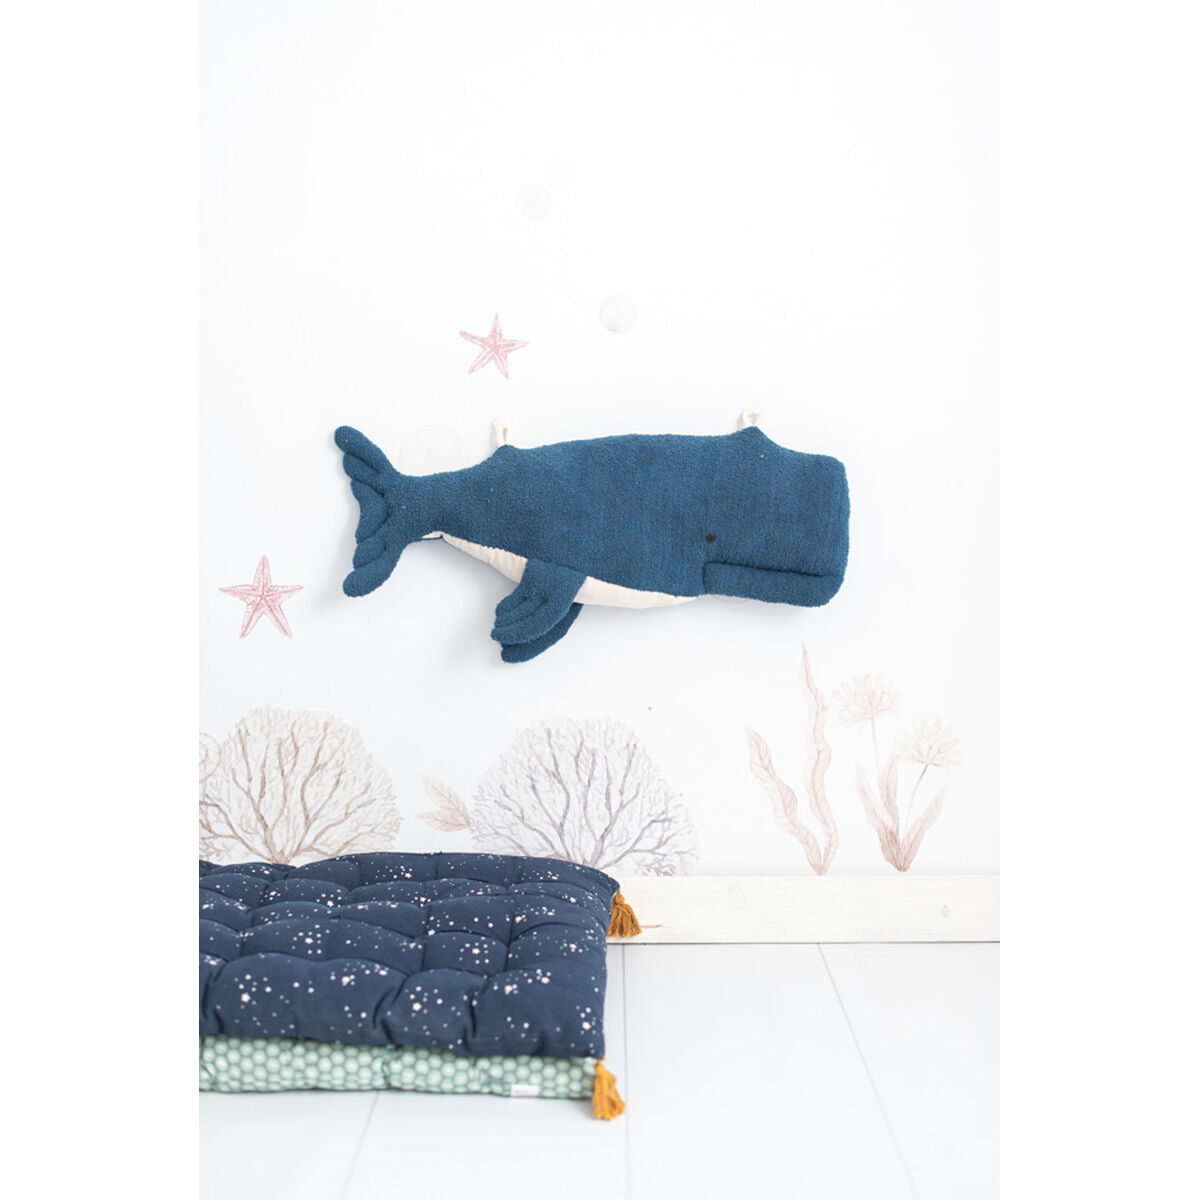 Fluffy toy Crochetts OCÉANO Blue Octopus Whale Manta ray 29 x 84 x 29 cm 4 Pieces